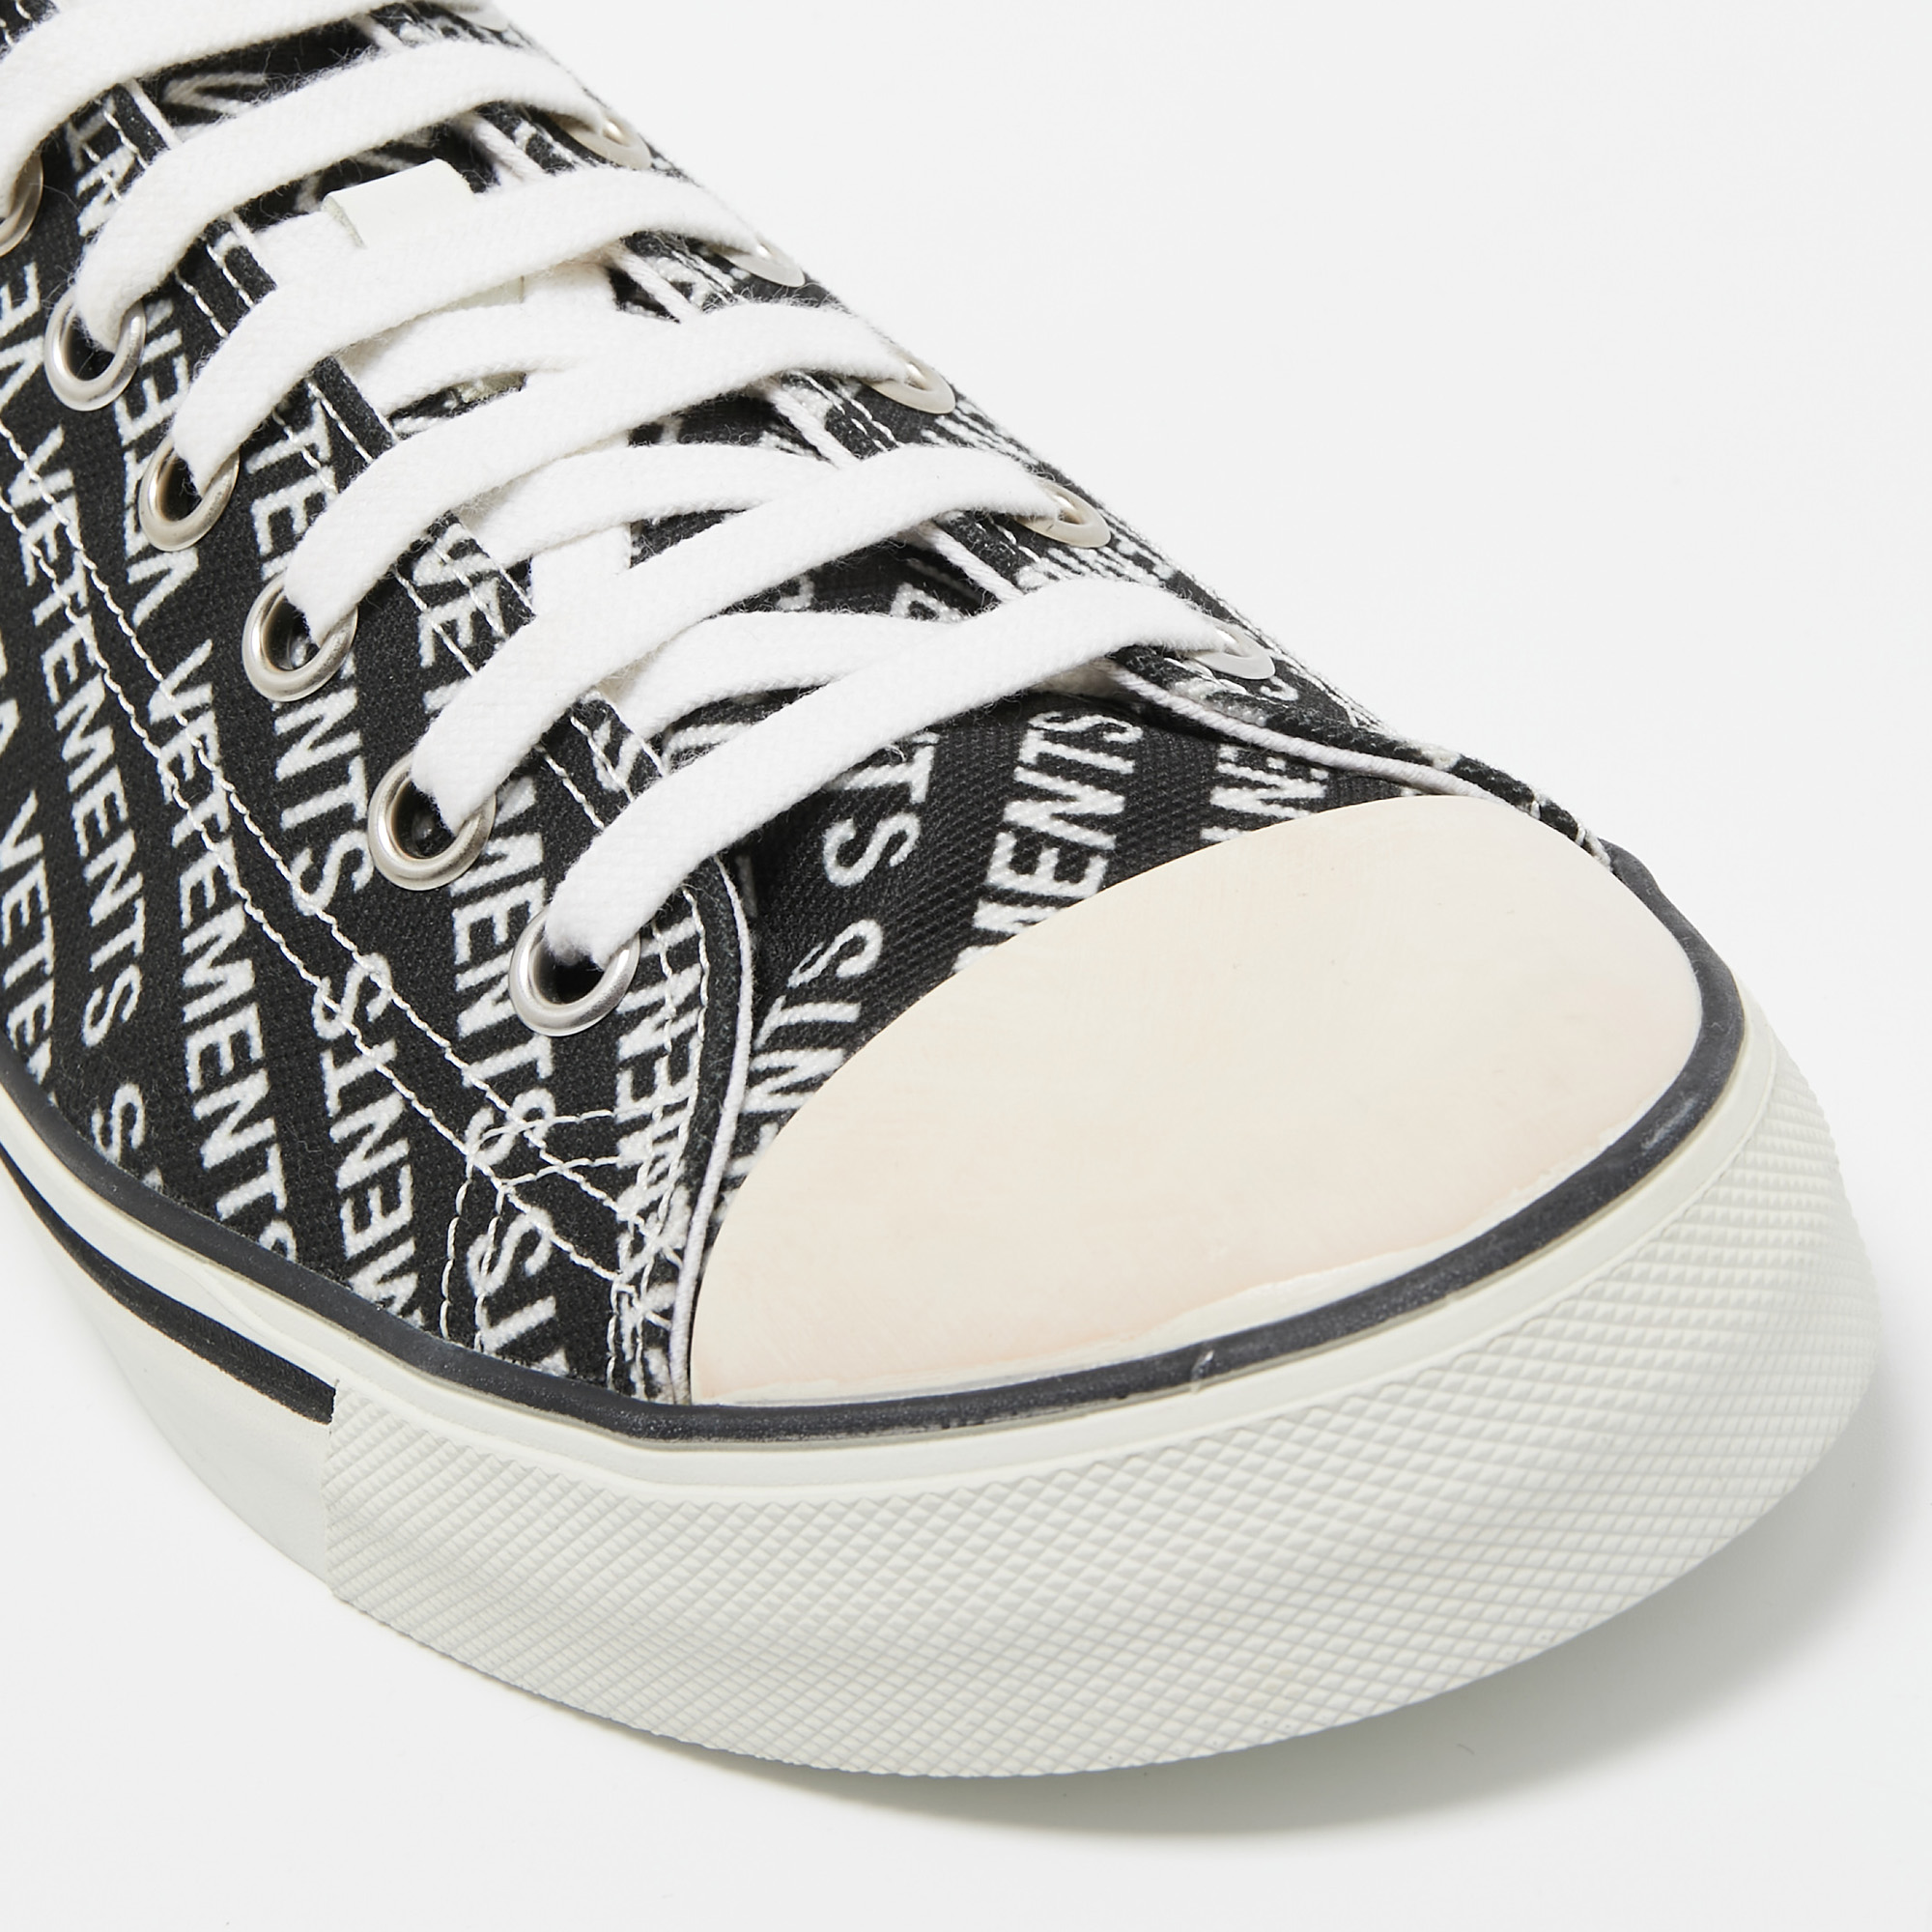 Vetements Black/White Logo Print Canvas Low Top Sneakers Size 44